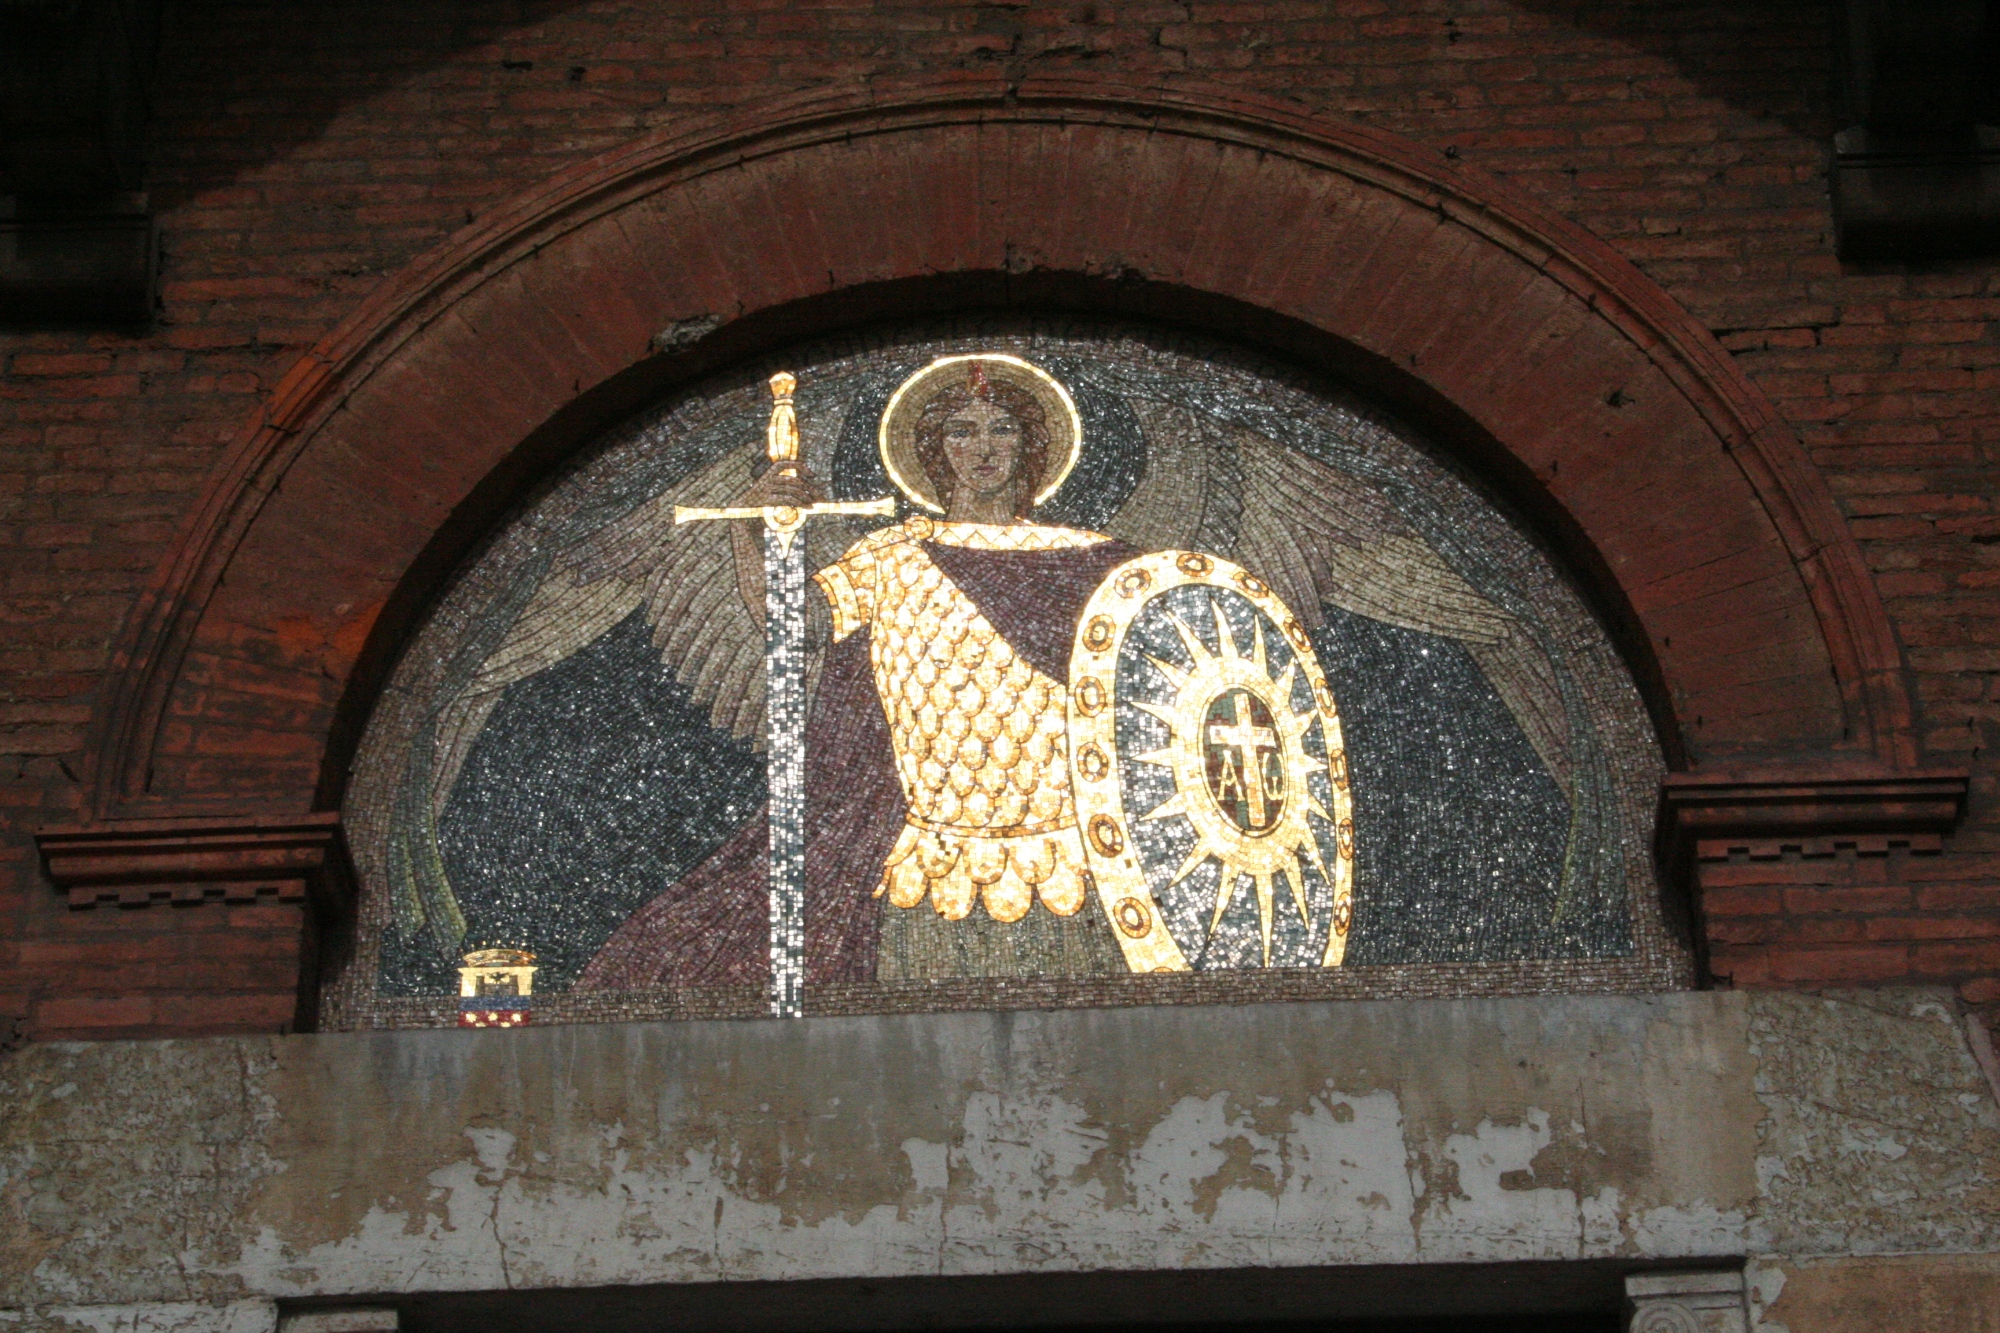 The lunette depicting the Archangel Michael